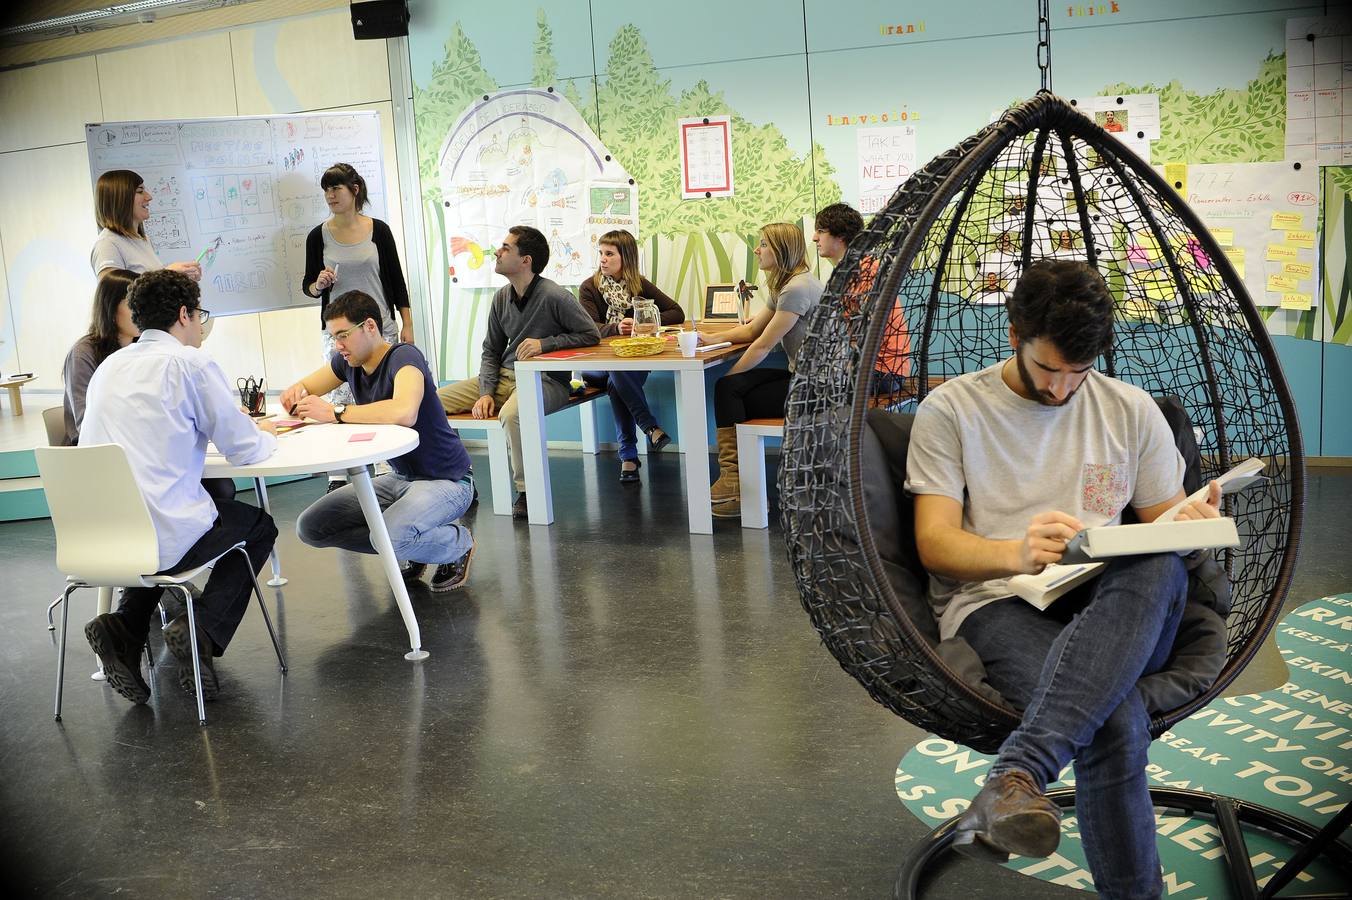 Jóvenes emprendedores comparten espacios e ideas en un vivero de empresas.